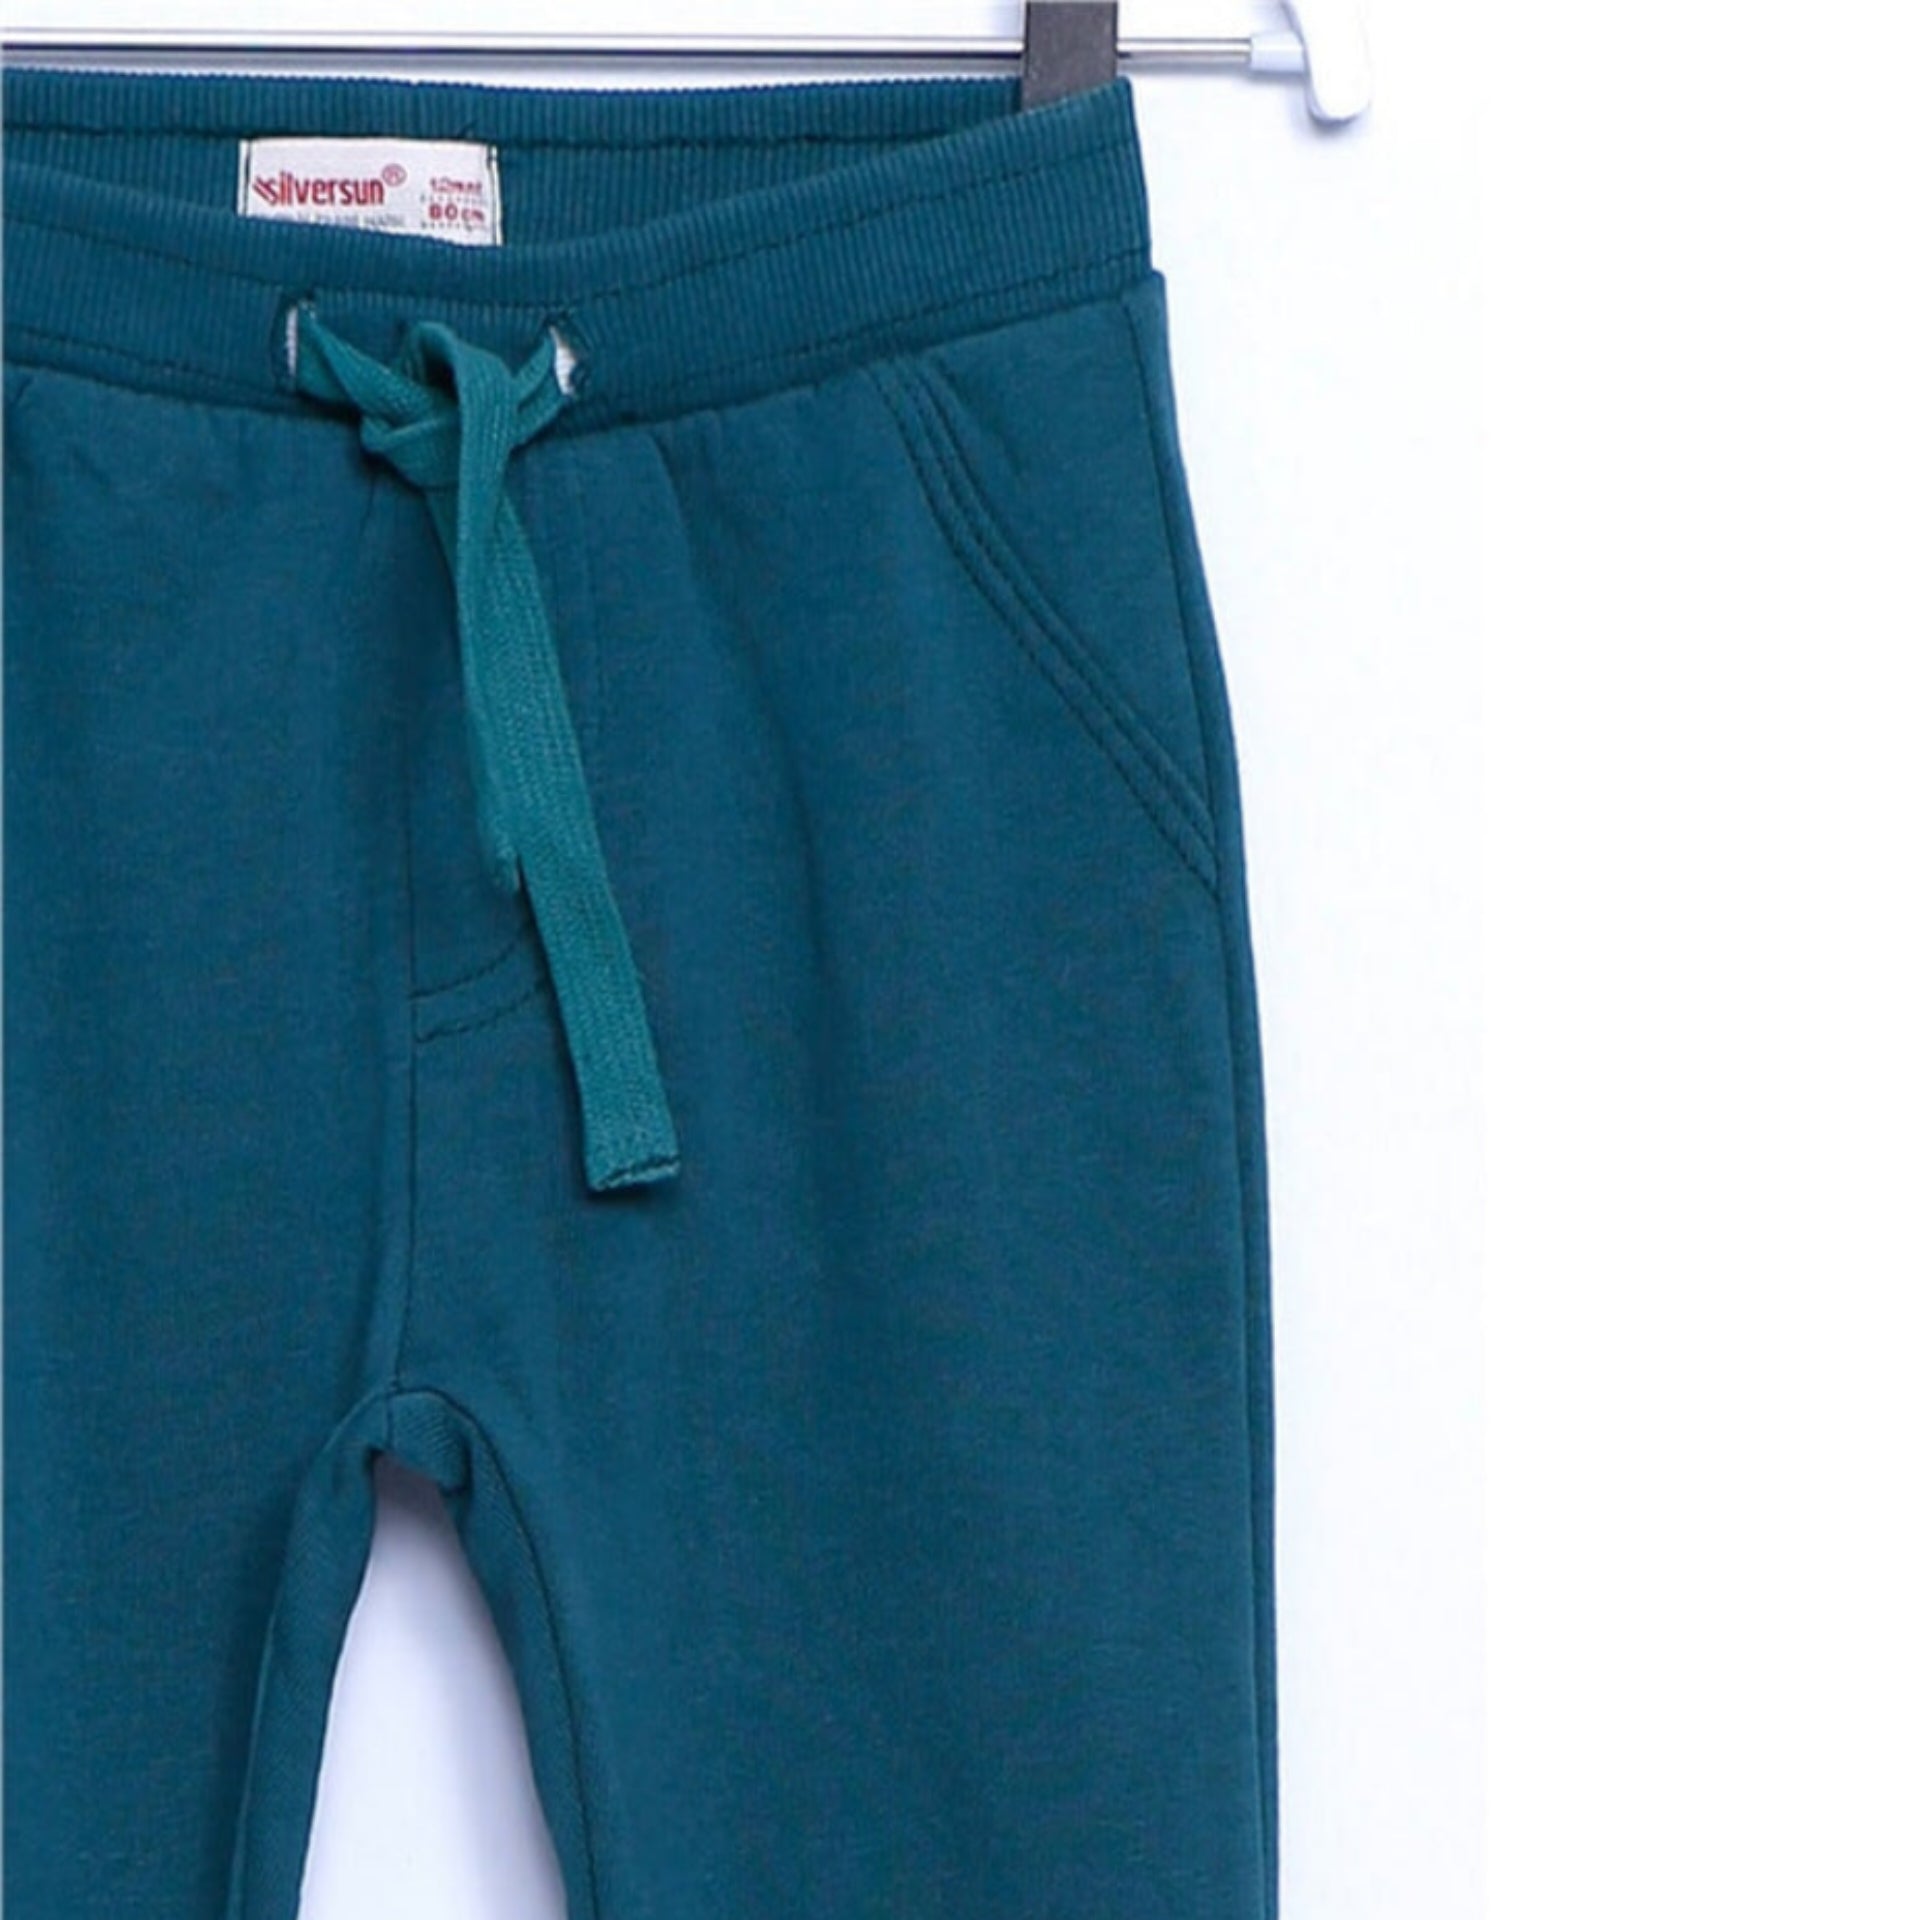 Green Elastic Waist Baby Boy Sweat Pants - Green Elastic Waist Baby Boy Sweat Pants - 6-9 Months - Silversun - Melymod